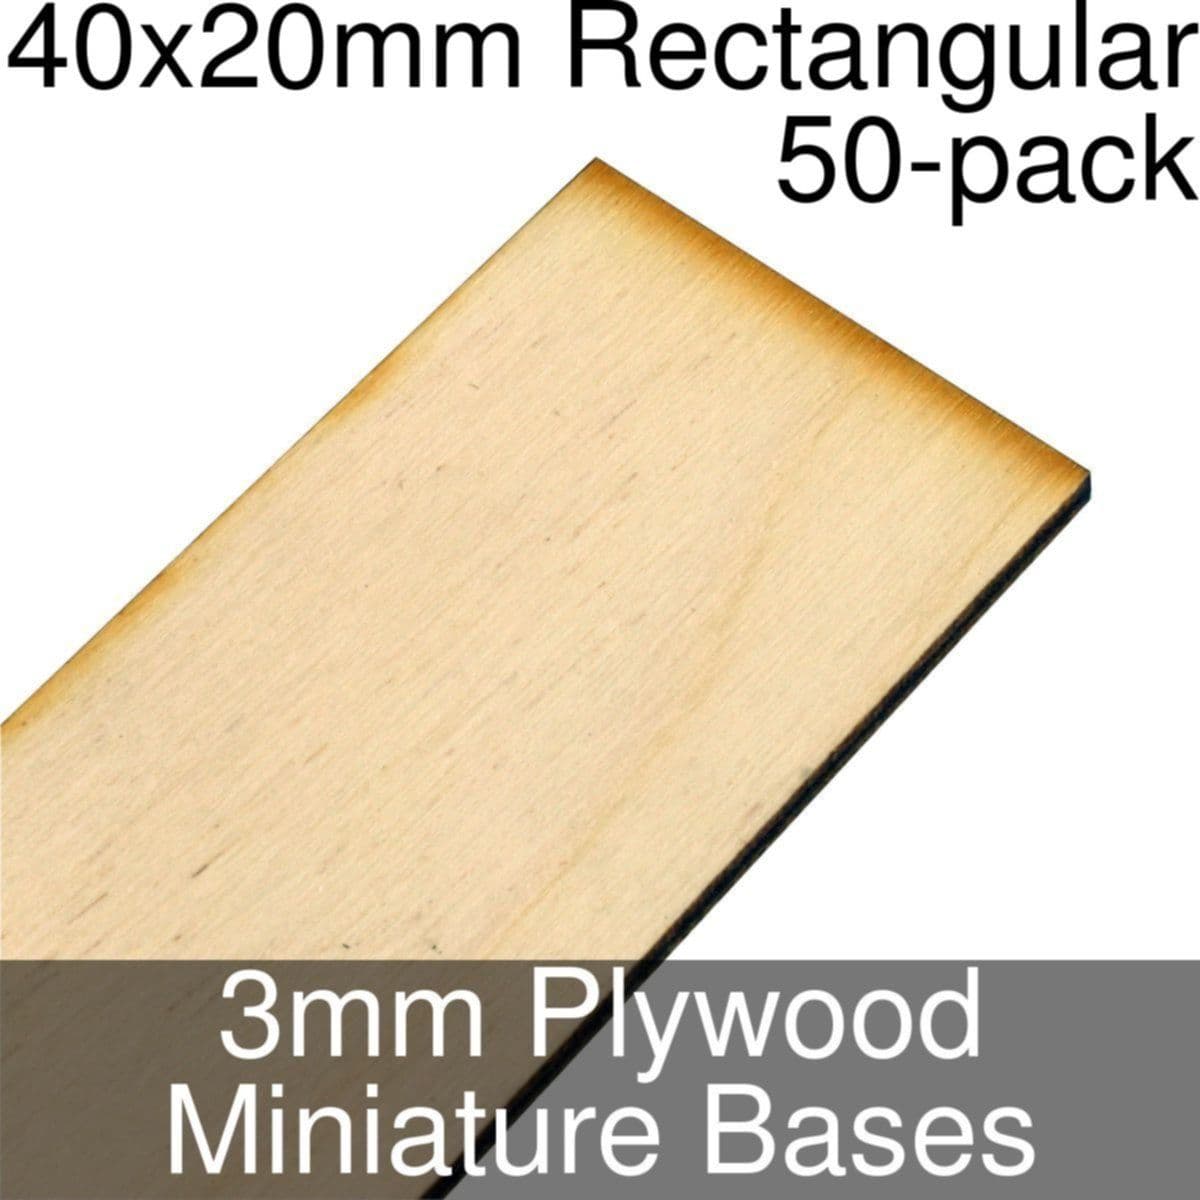 Miniature Bases, Rectangular, 40x20mm, 3mm Plywood (50)